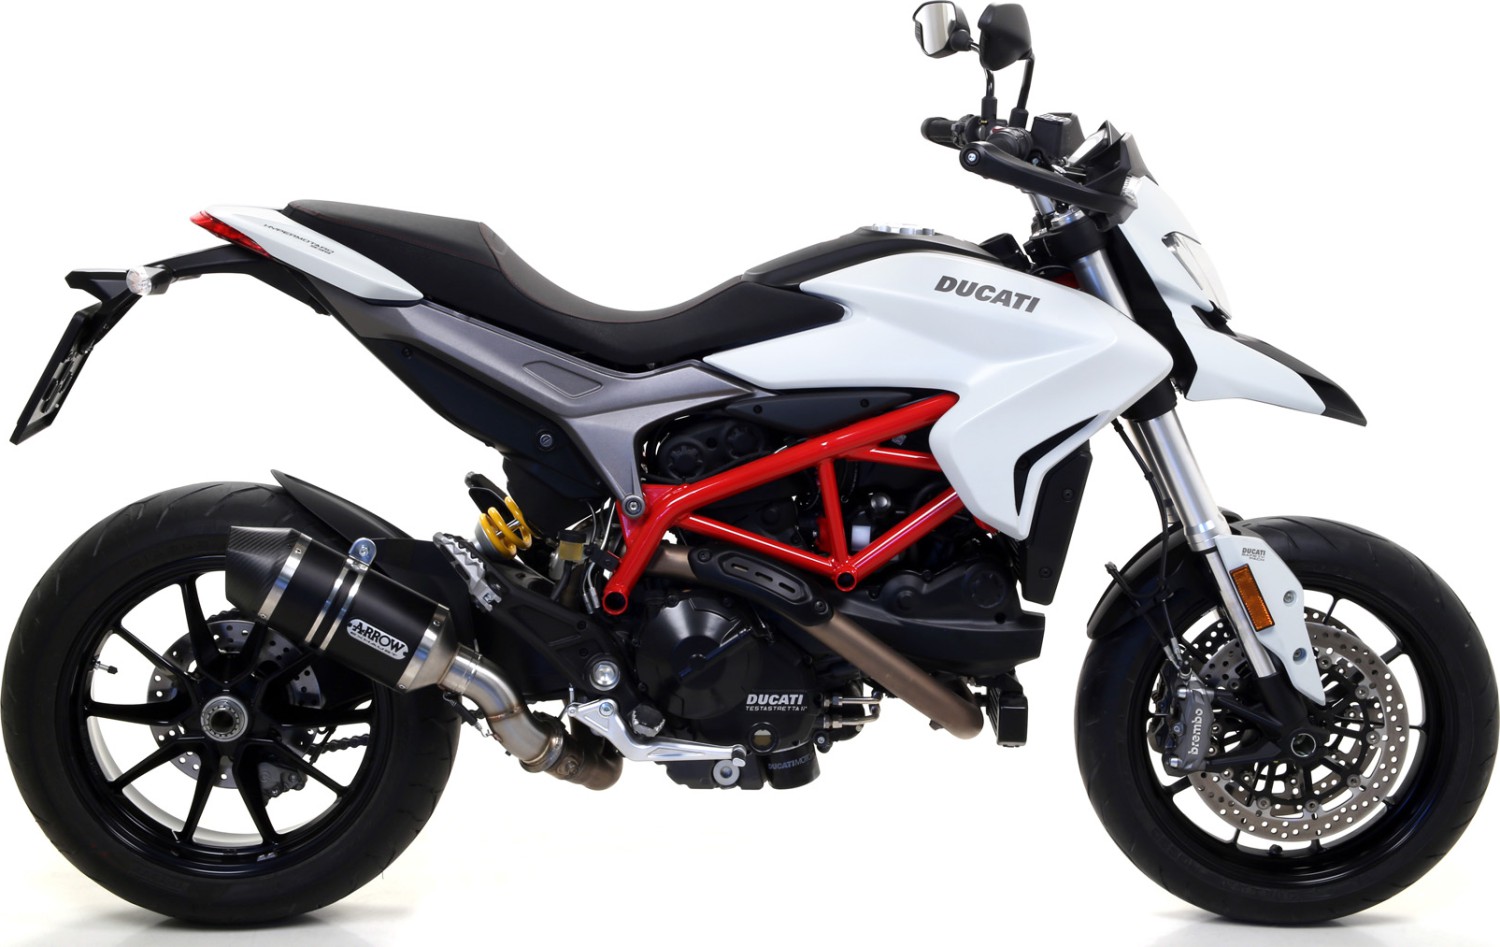  Ducati Hypermotard / Hyperstrada, Bj. 2013-2015 